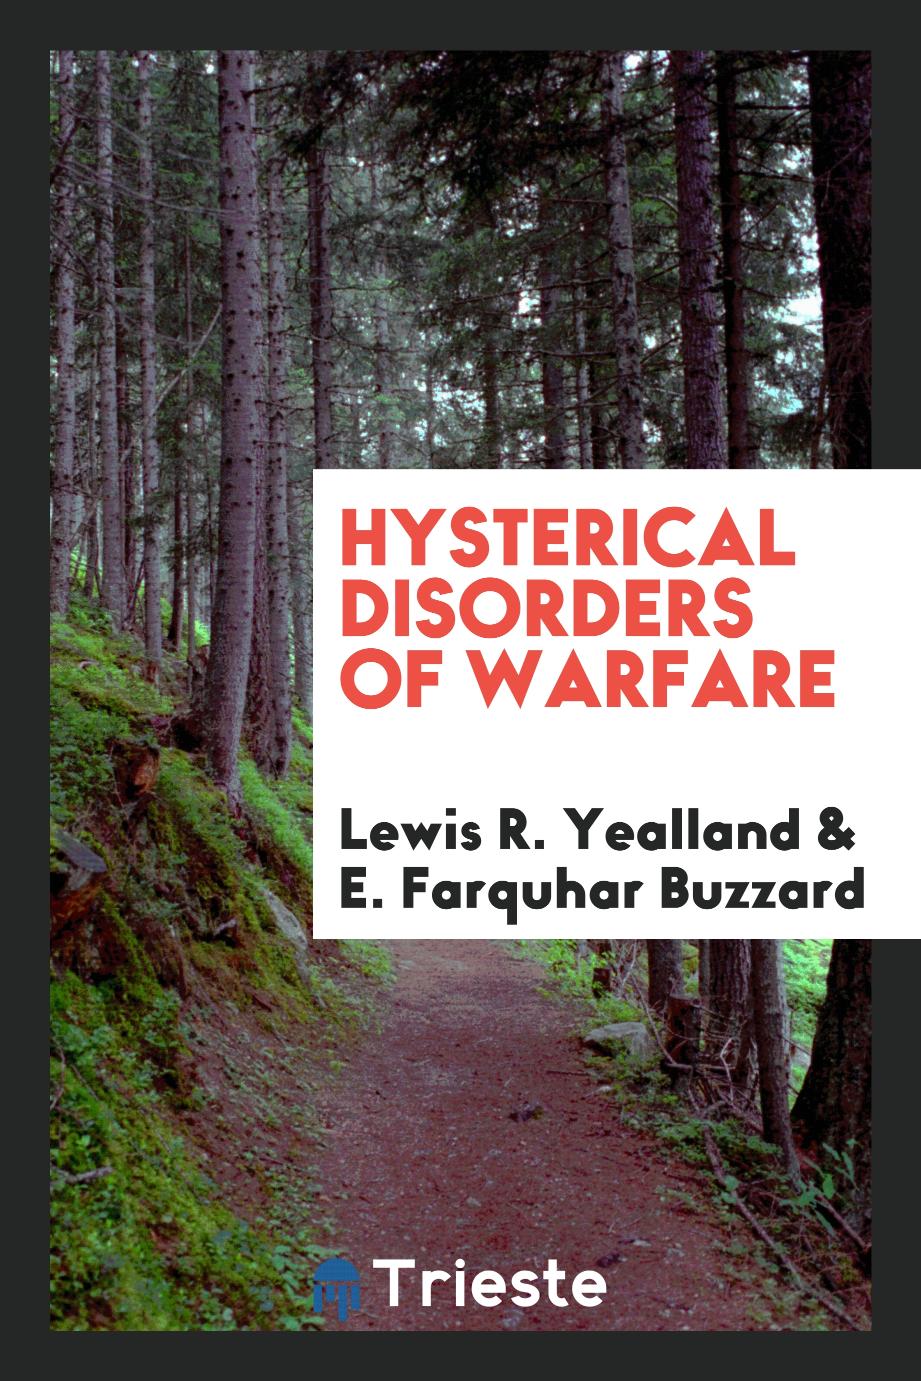 Hysterical disorders of warfare